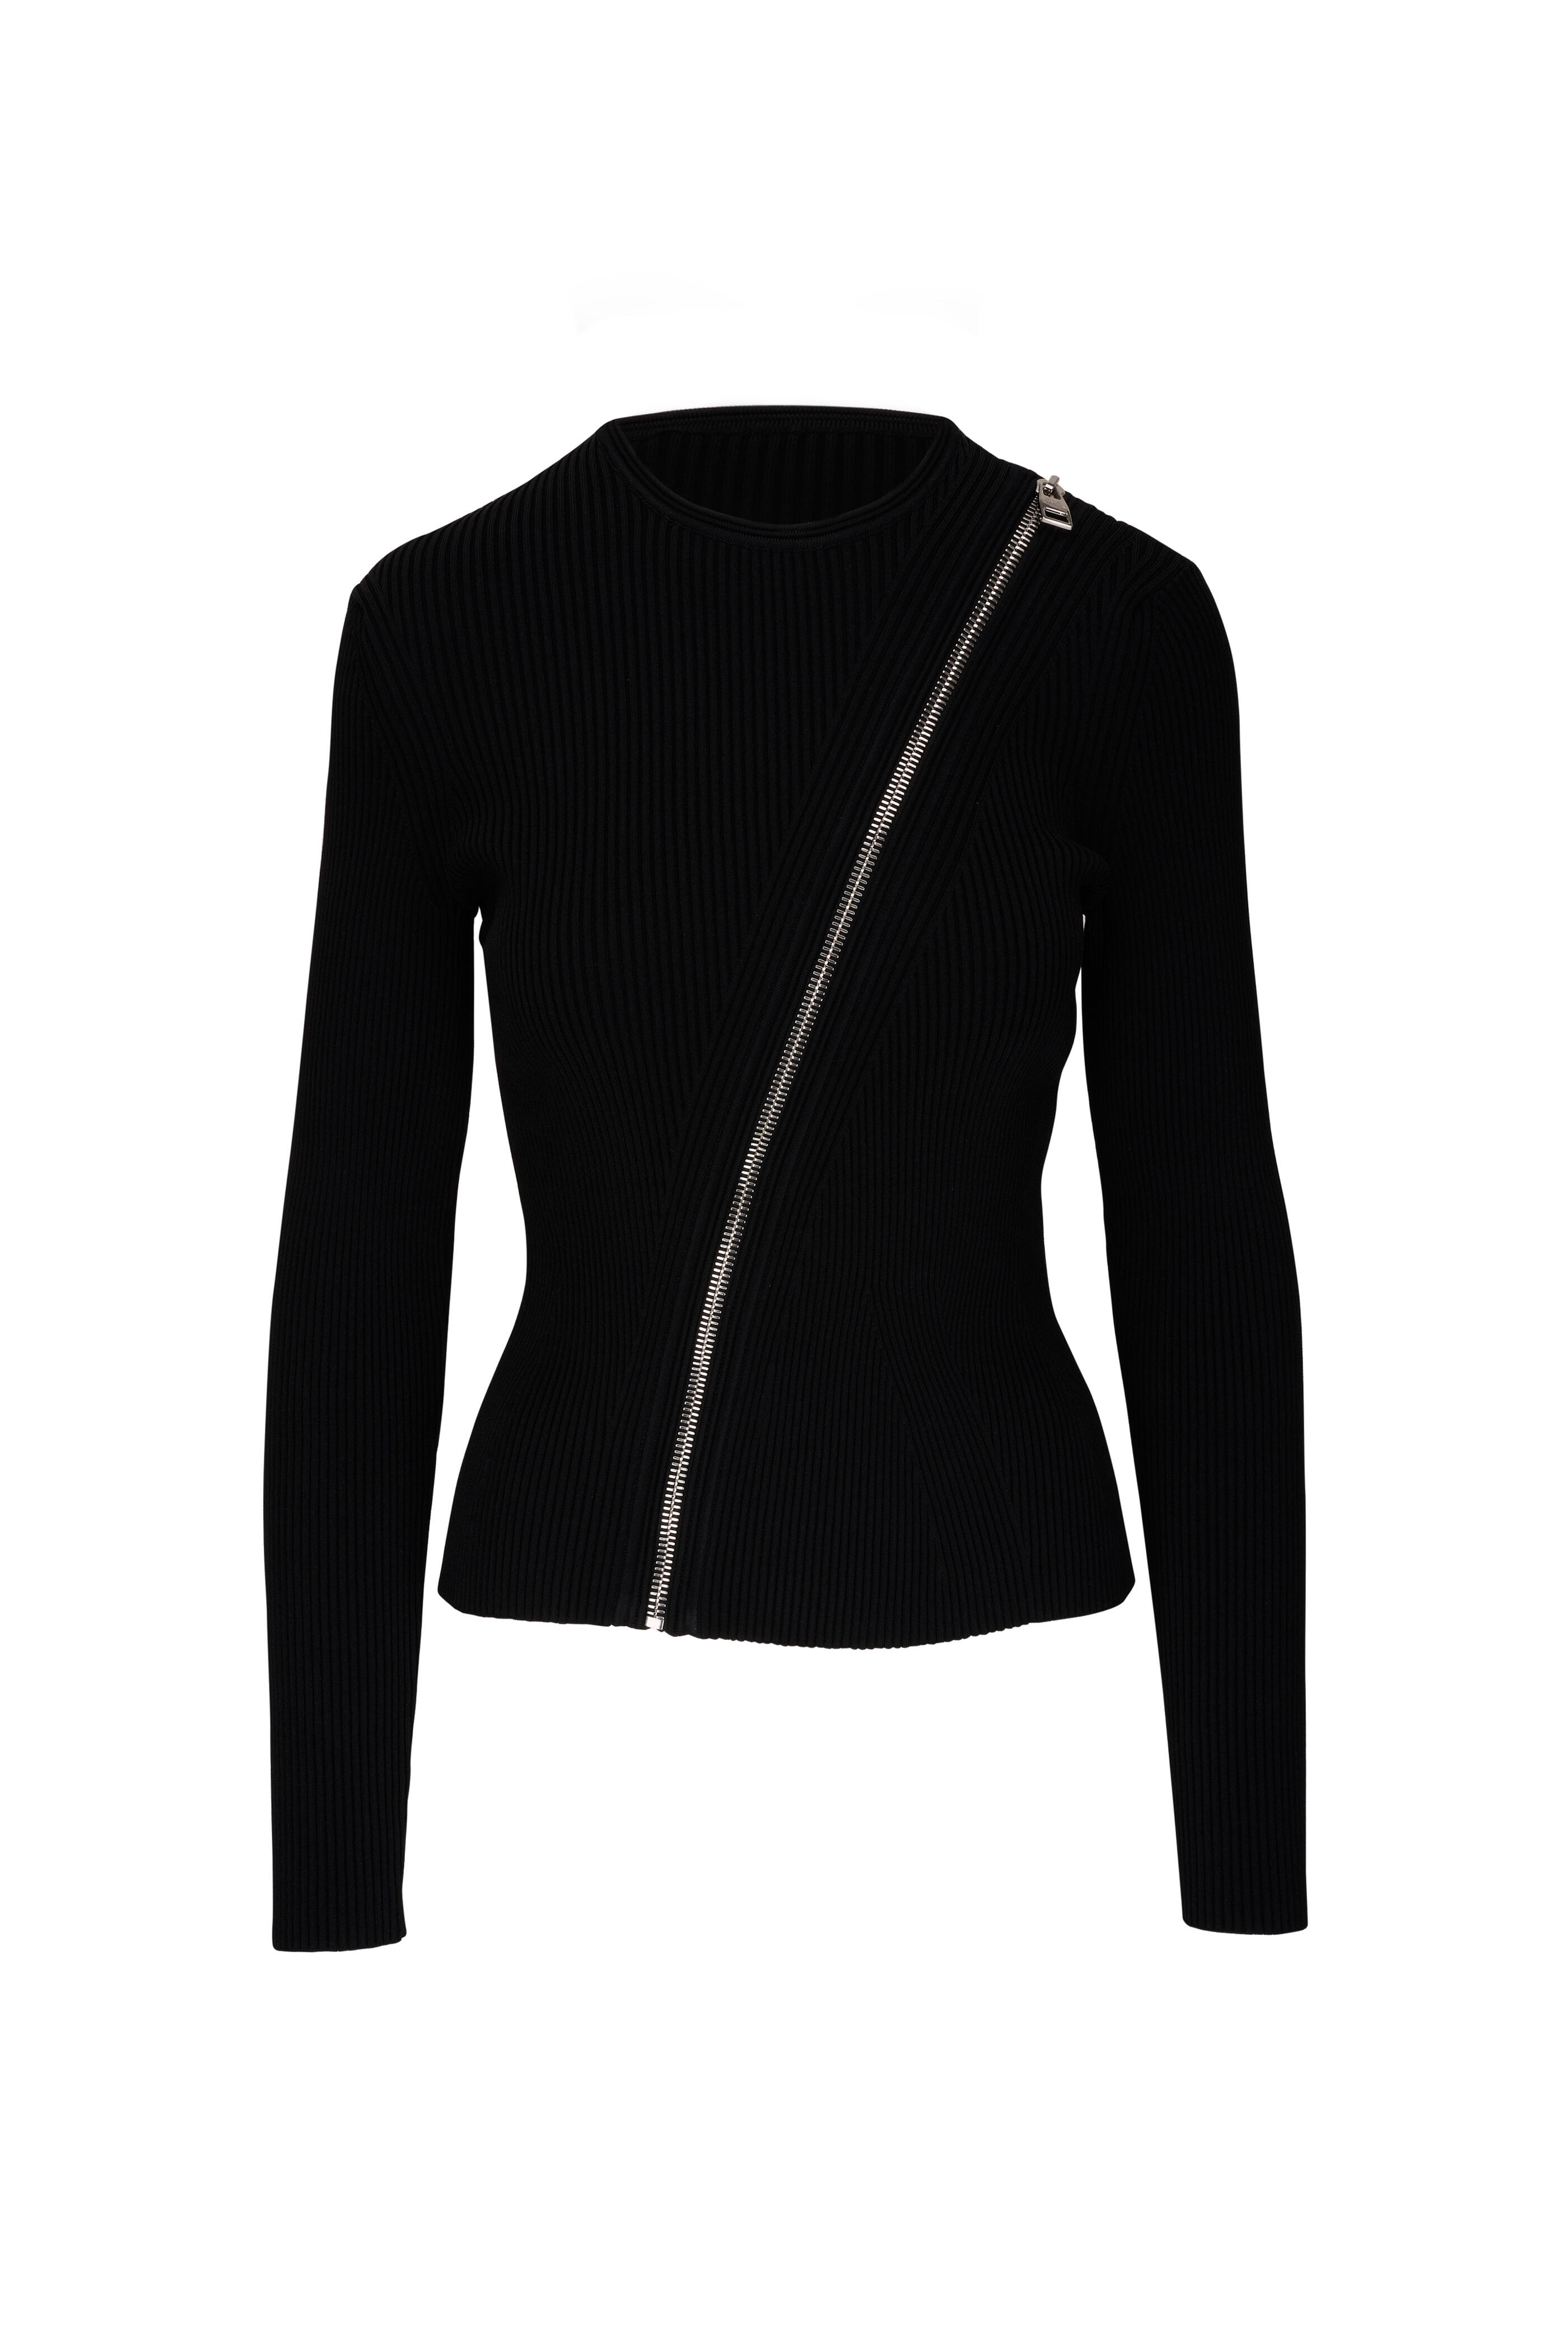 Alexander McQueen - Black & Silver Zip Slash Black Ribbed Knit Top